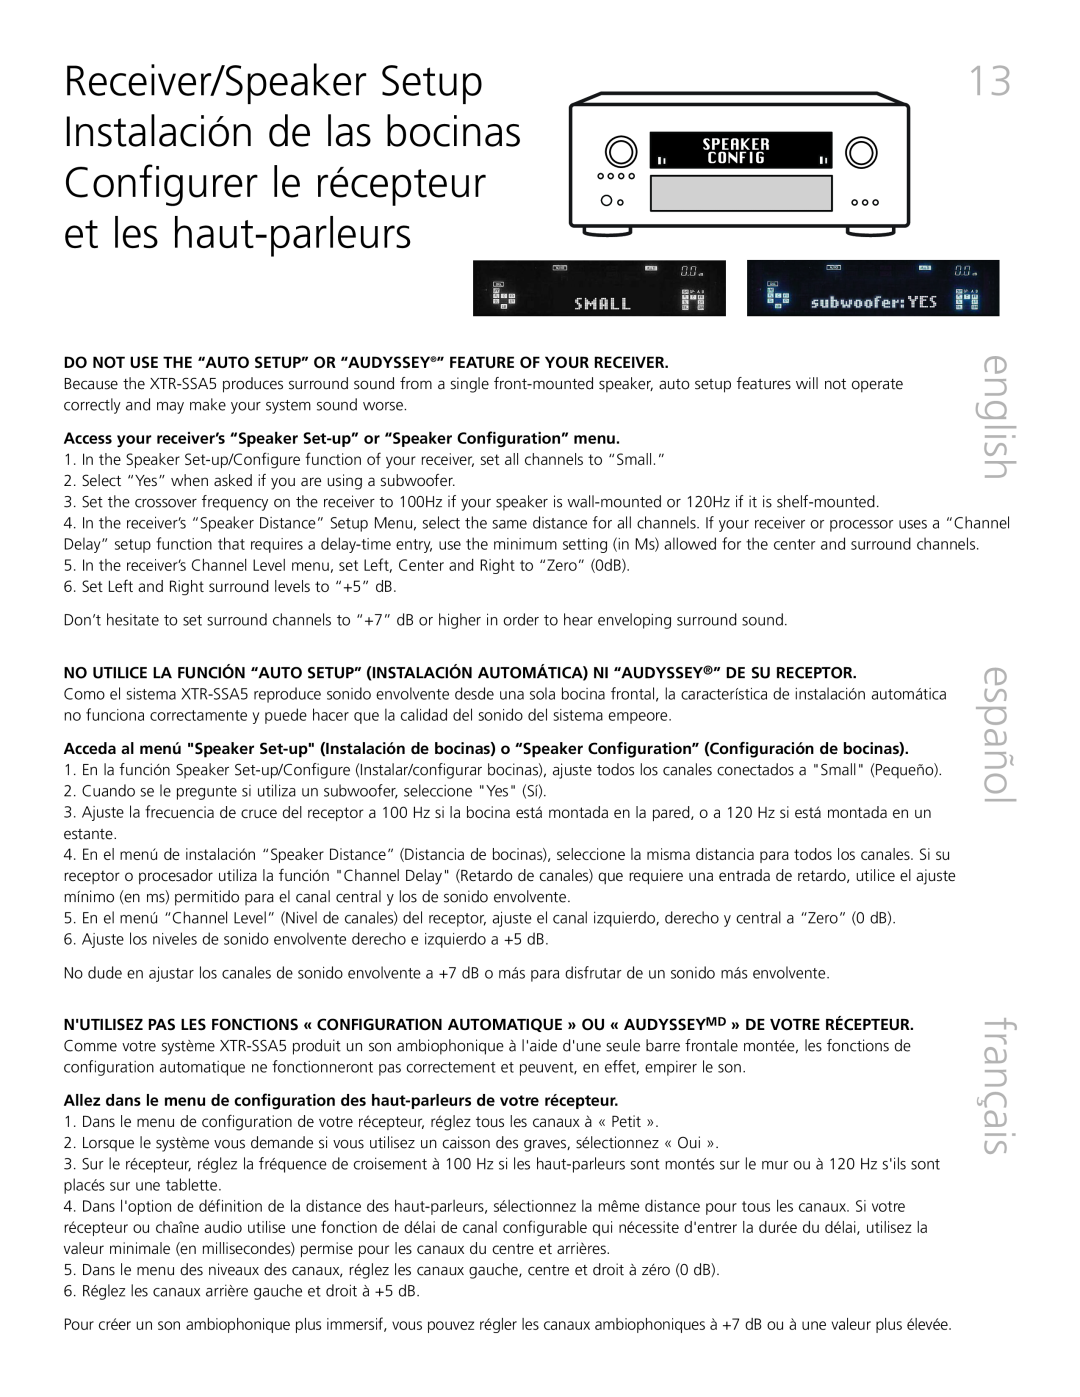 Definitive Technology XTR-SSA5 Receiver/Speaker Setup, Instalación de las bocinas, Configurer le récepteur, español 